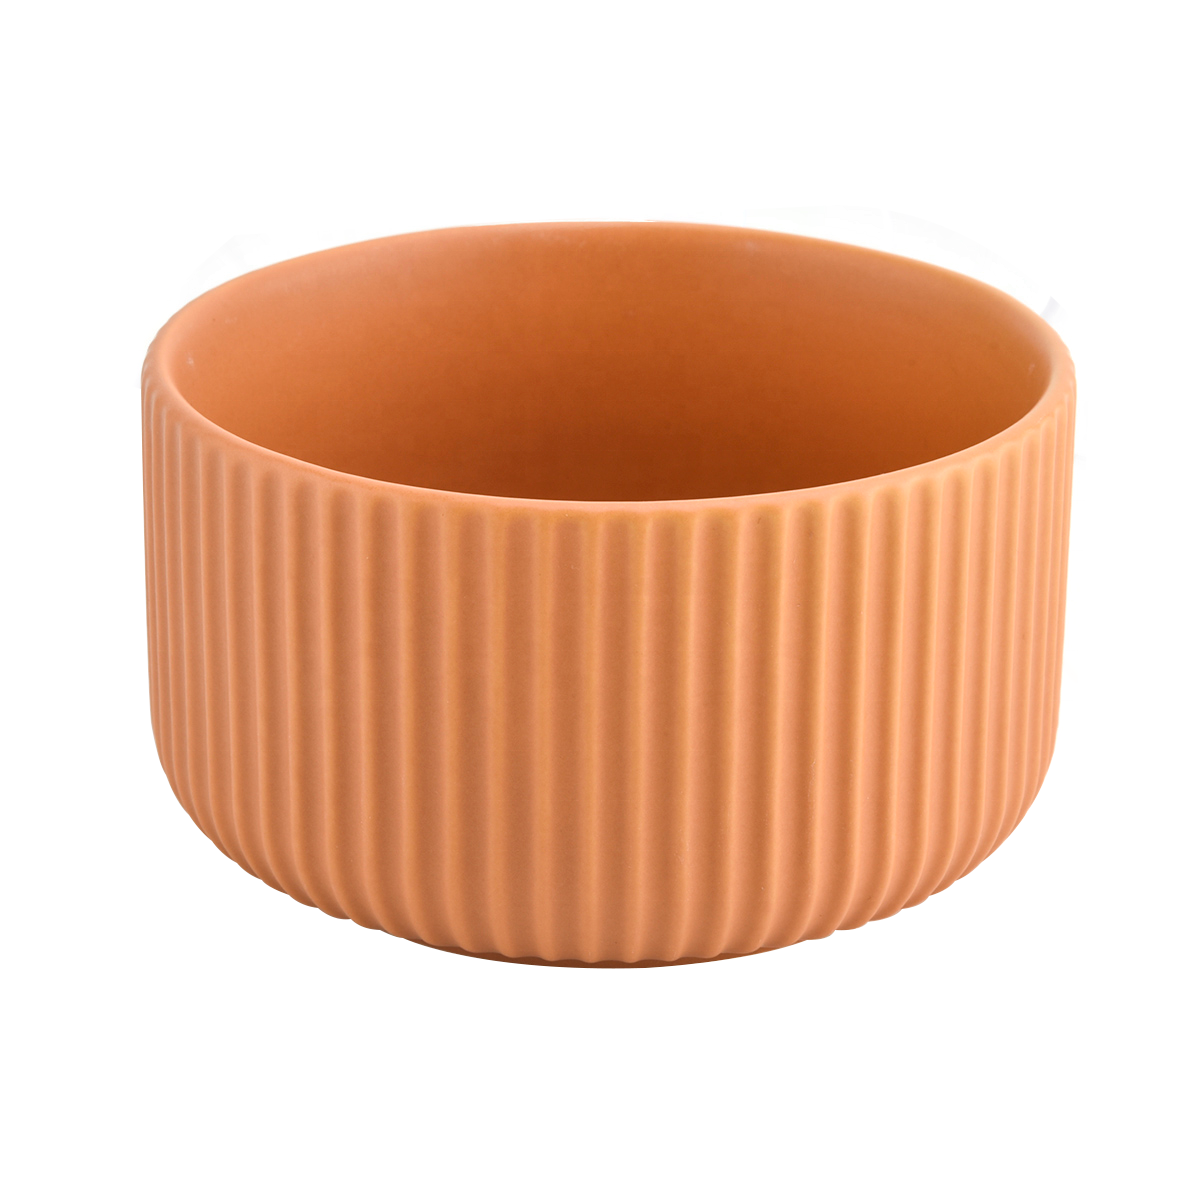 peach glazed ceramic candle vessels with stripe designs